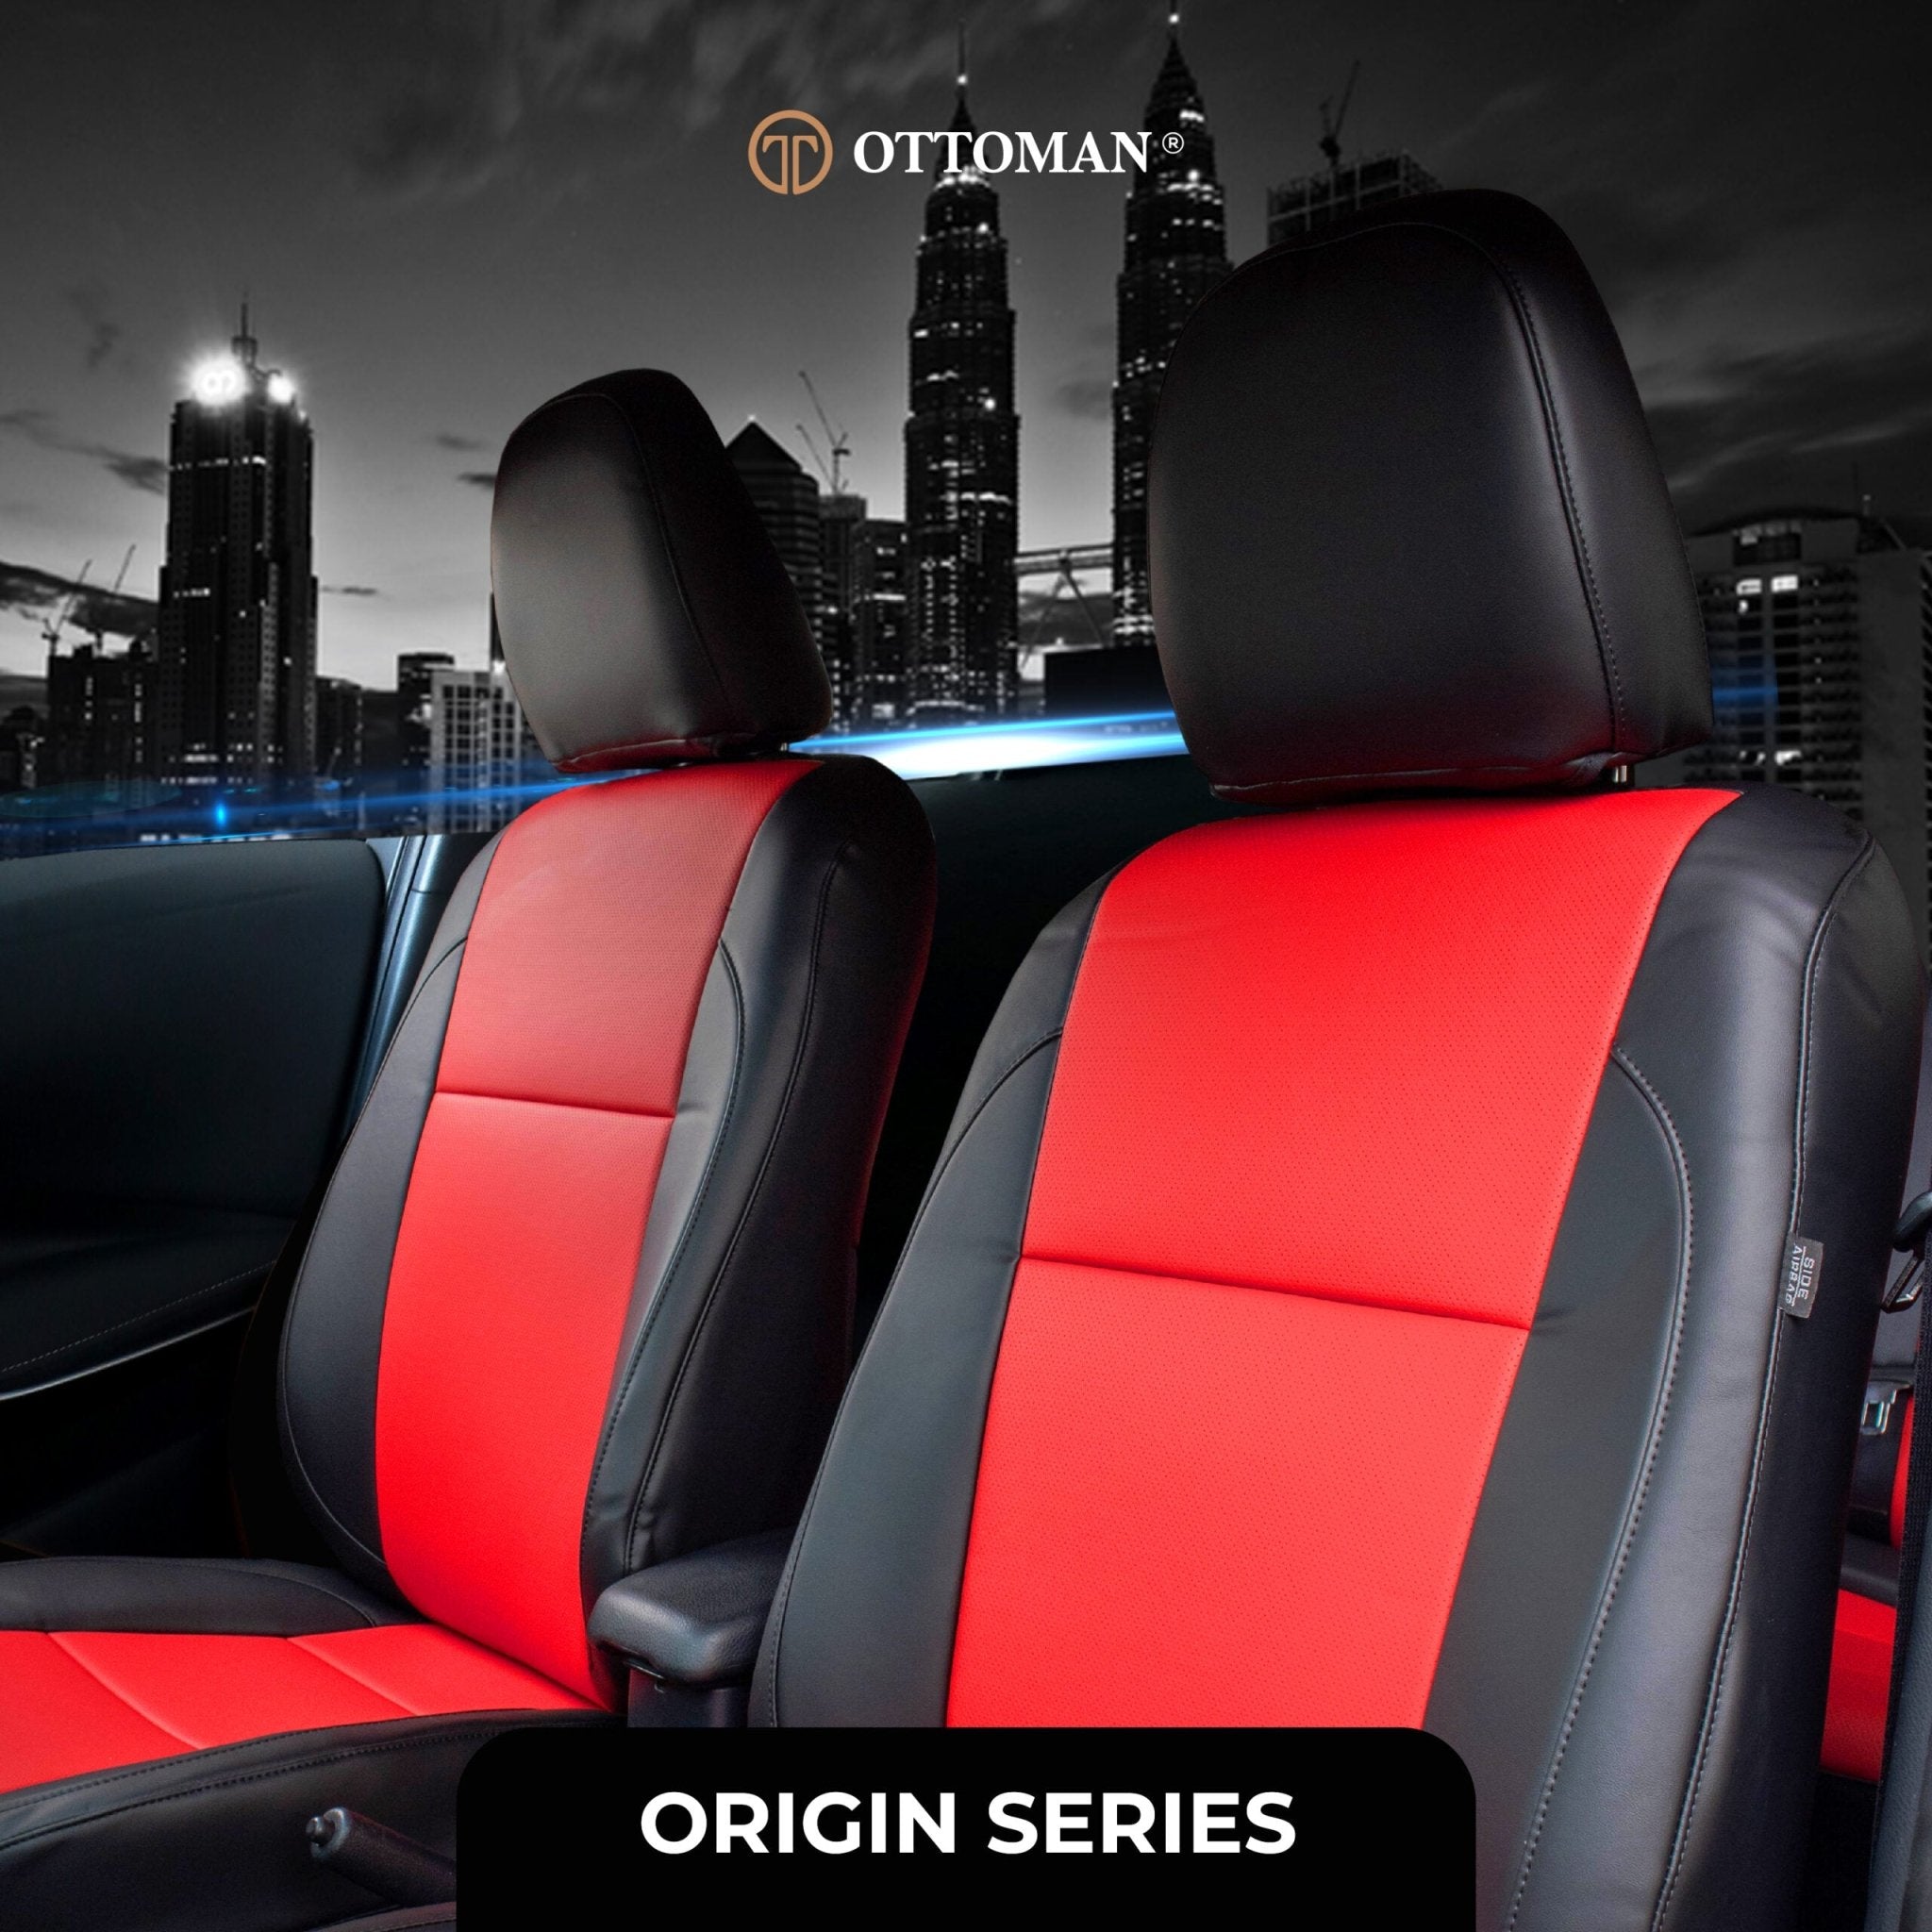 Honda City GM6 (2014-2019) Ottoman Seat Cover Seat Cover in Klang Selangor, Penang, Johor Bahru - Ottoman Car Mats